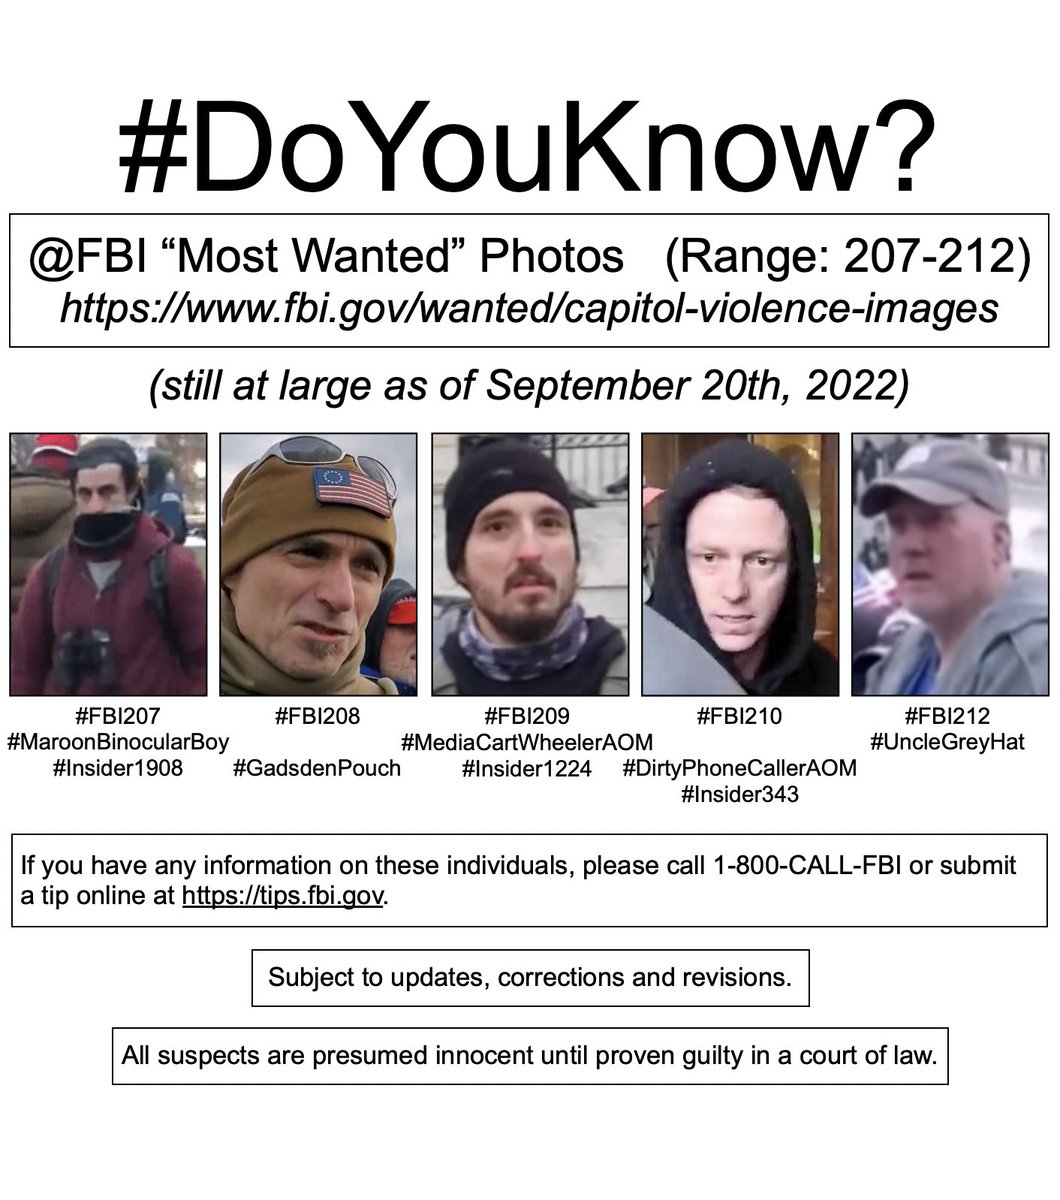 #SeditionHunters
#DoYouKnow?
🧵
18/

fbi.gov/wanted/capitol…
Range: 207-212

#FBI207 (#MaroonBinocularBoy)(#Insider1908)

#FBI208 (#GadsdenPouch)

#FBI209 (#MediaCartWheelerAOM)(#Insider1224)

#FBI210 (#DirtyPhoneCallerAOM)(#Insider343)

#FBI212 (#UncleGreyHat)

#SeditionInsiders